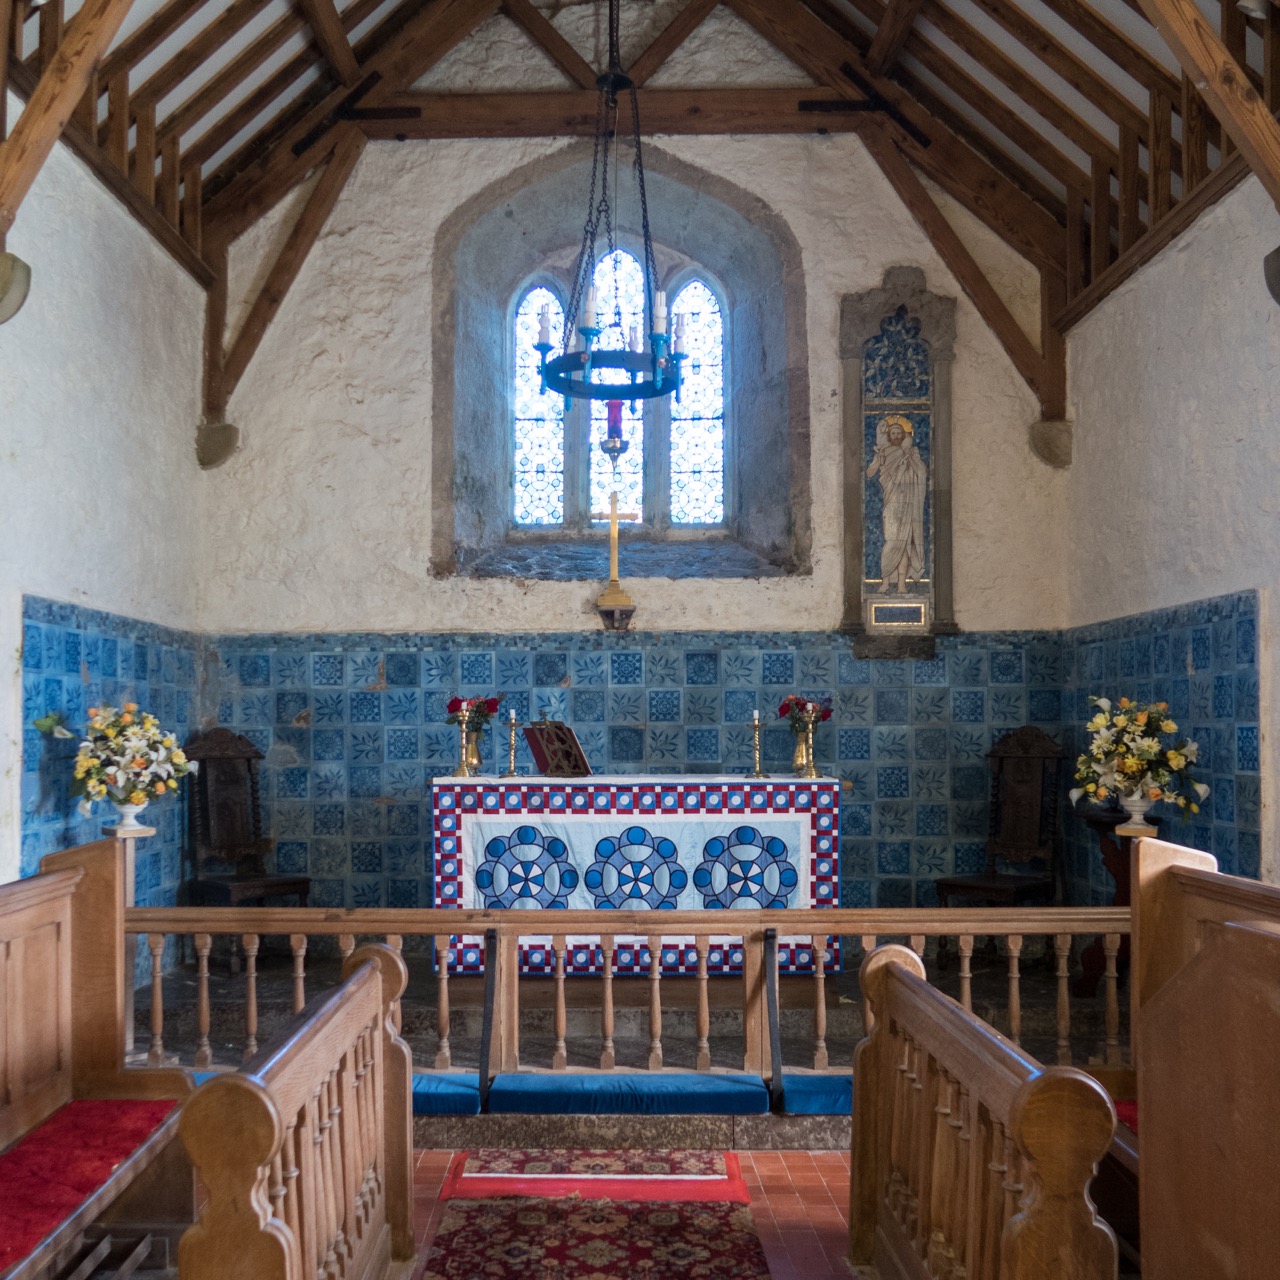 Eglwys Sant Padrig/St Patrick’s Church, interior view